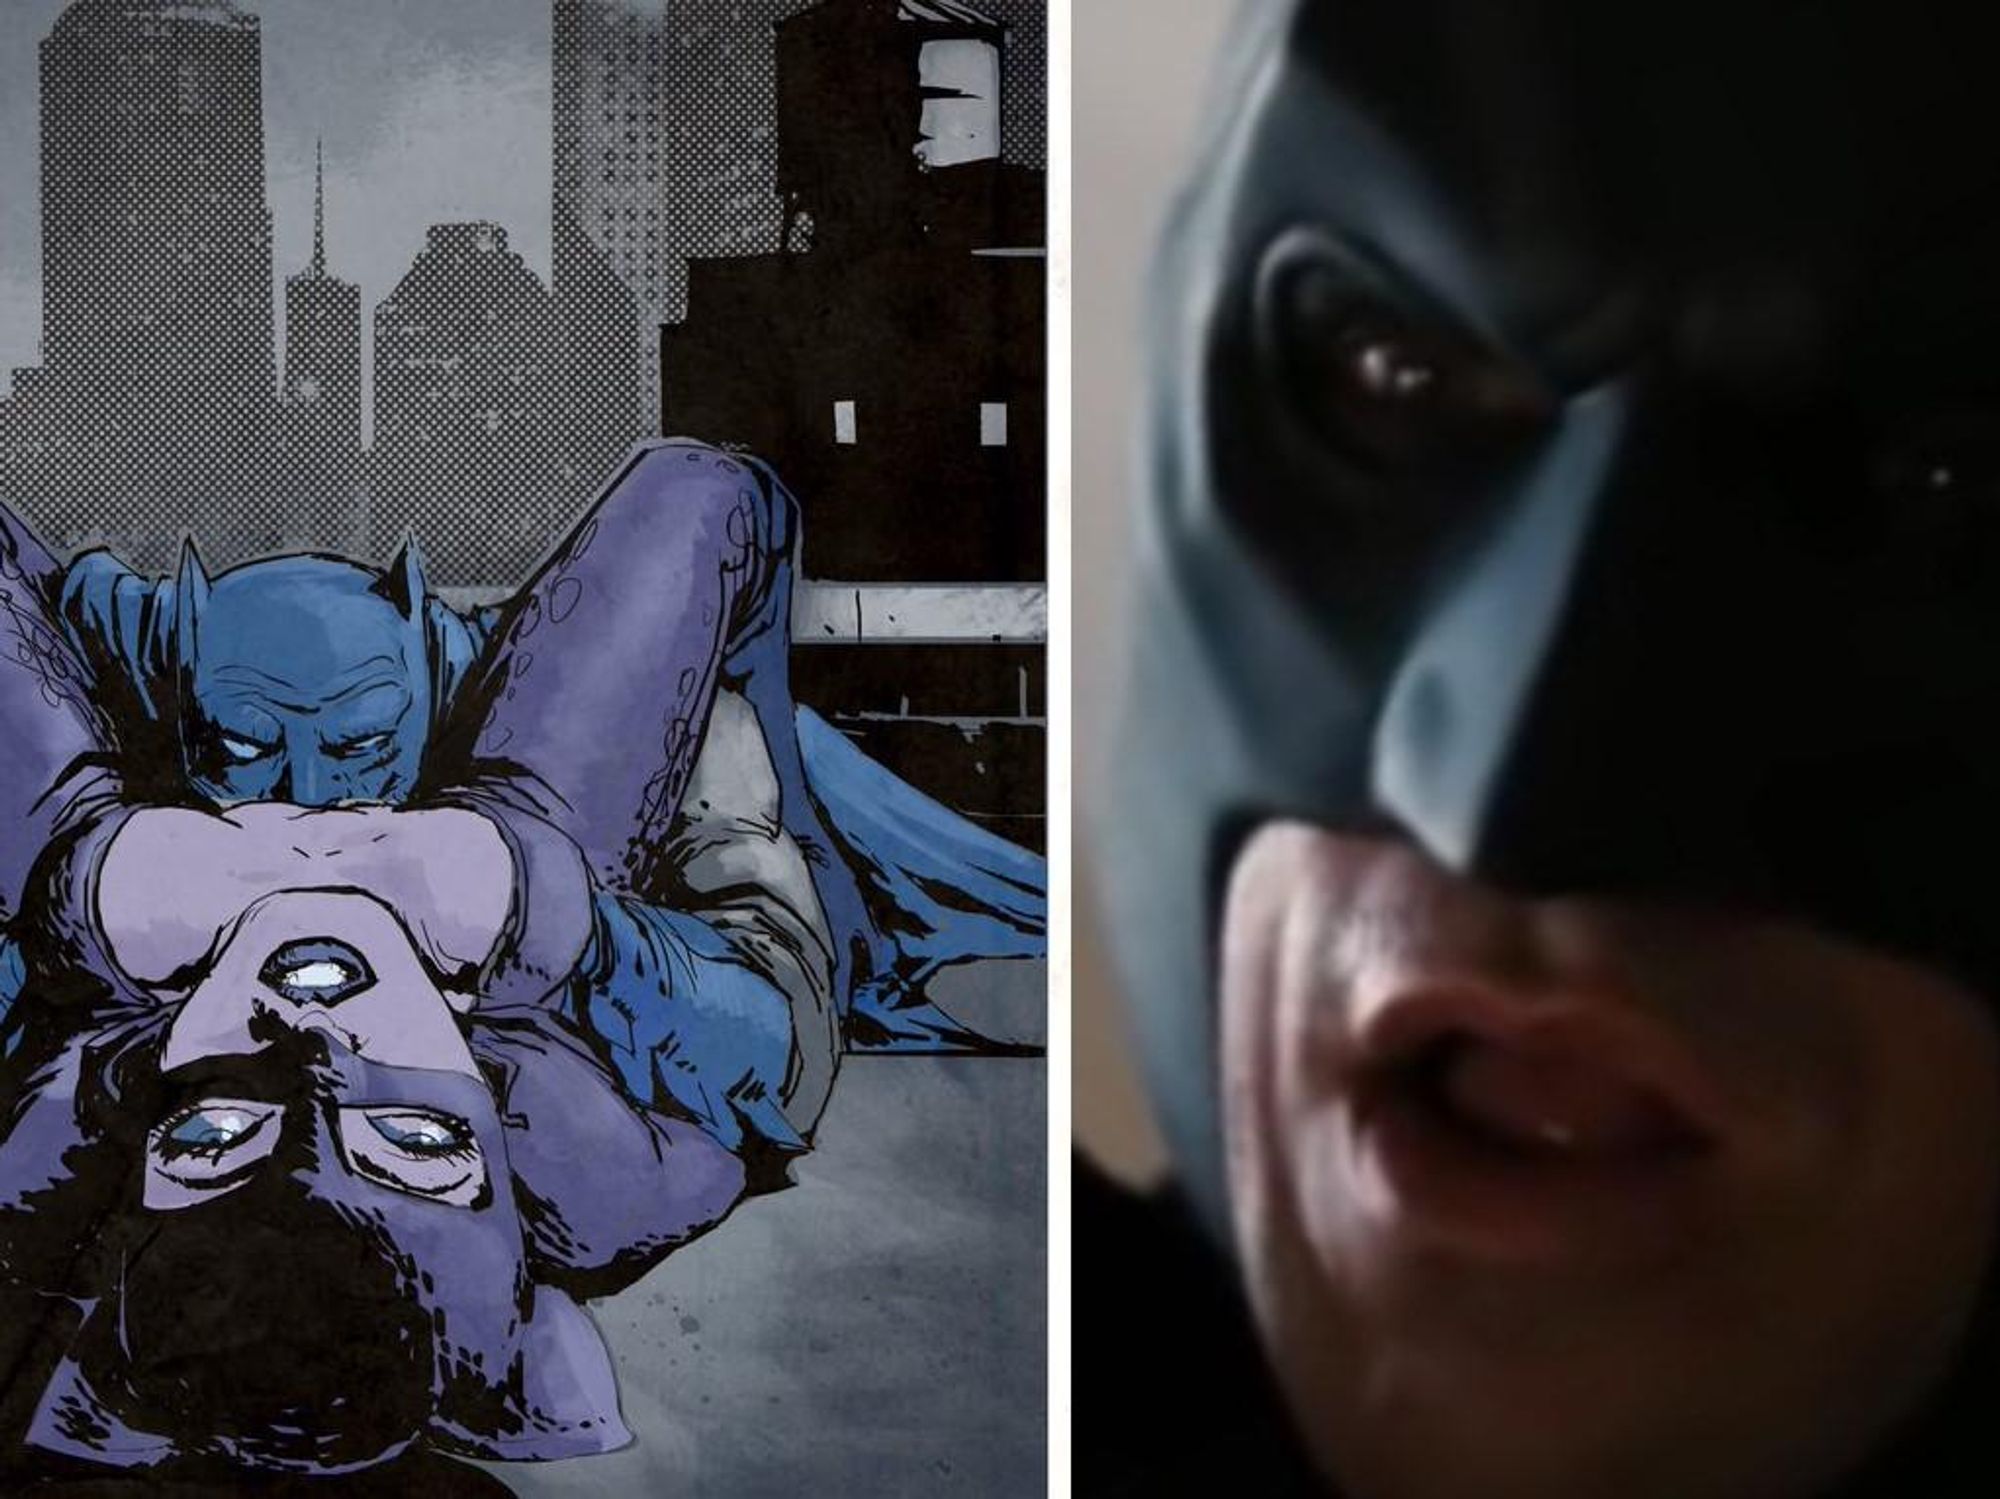 Batman Oral Uproar: Zack Snyder Confirms, Heroes Do Go Down - Popdust